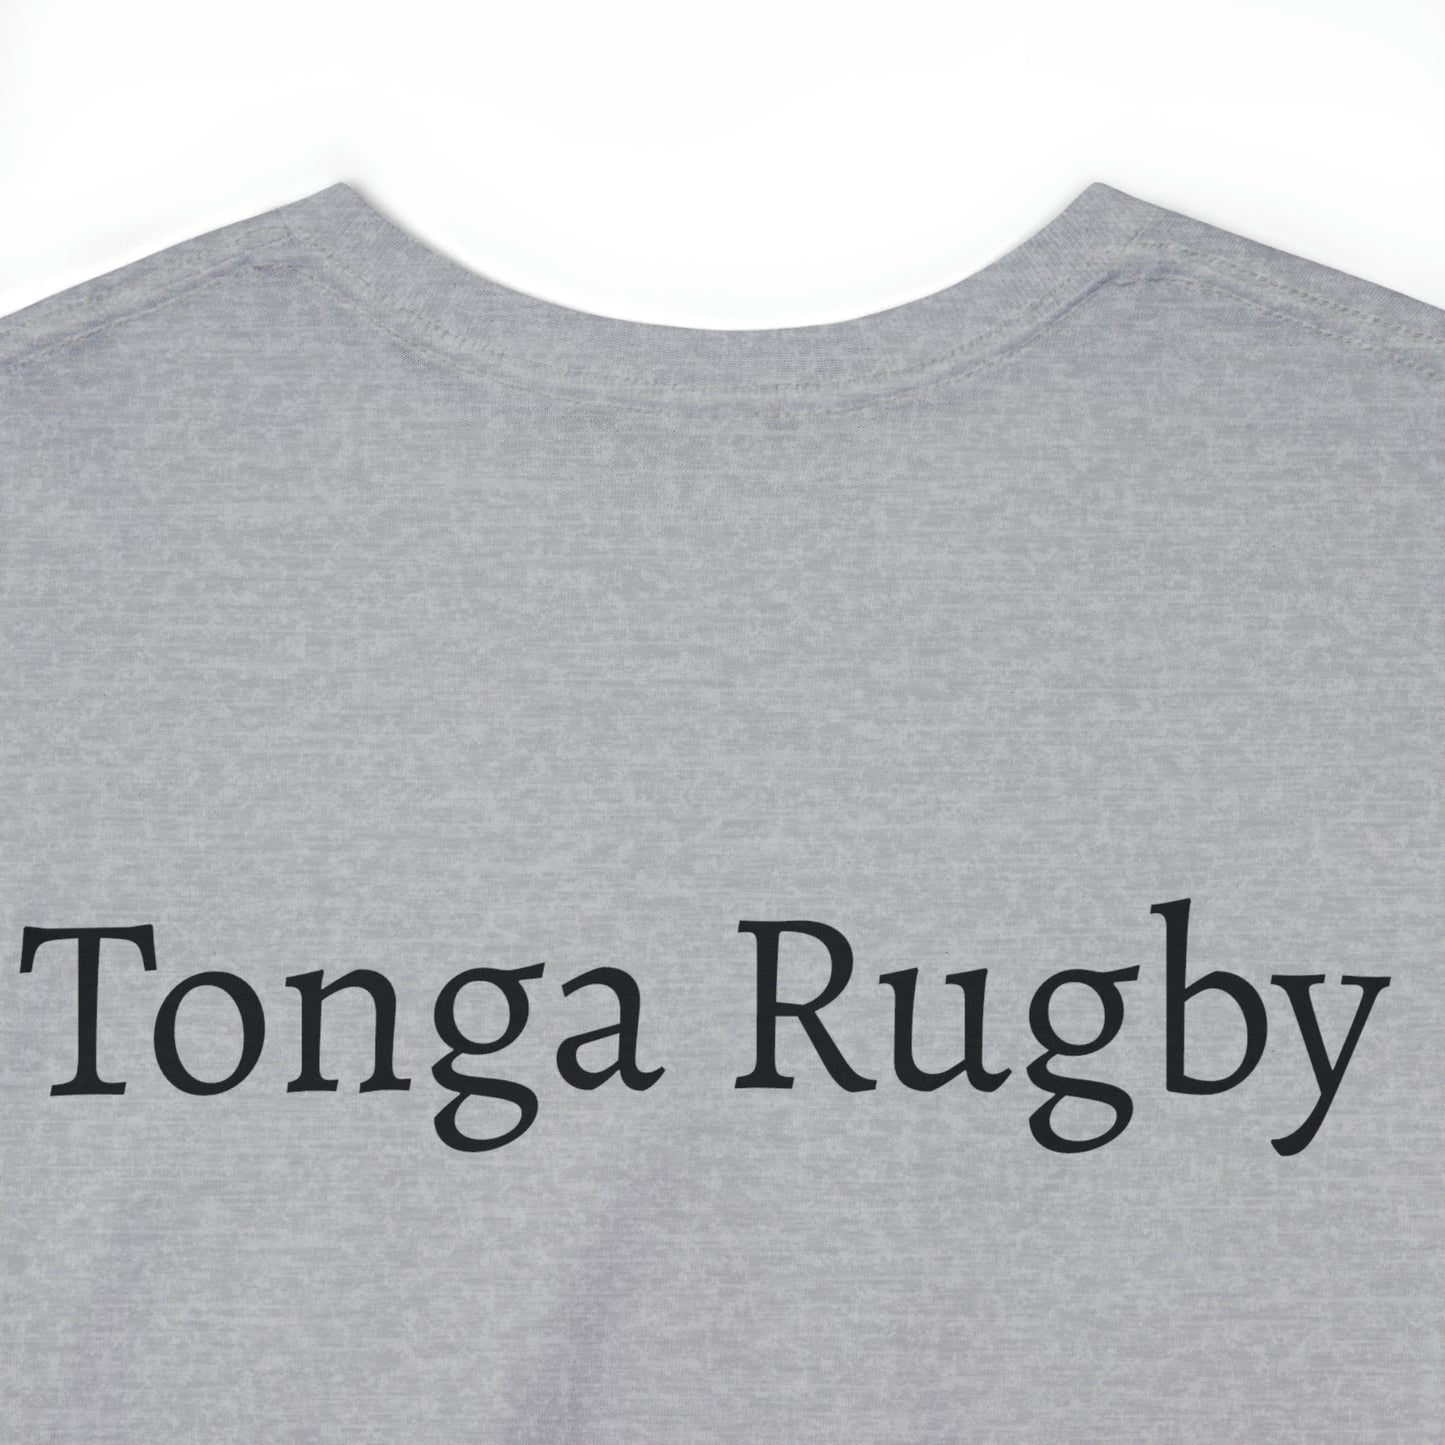 Tonga lifting the RWC - light shirts